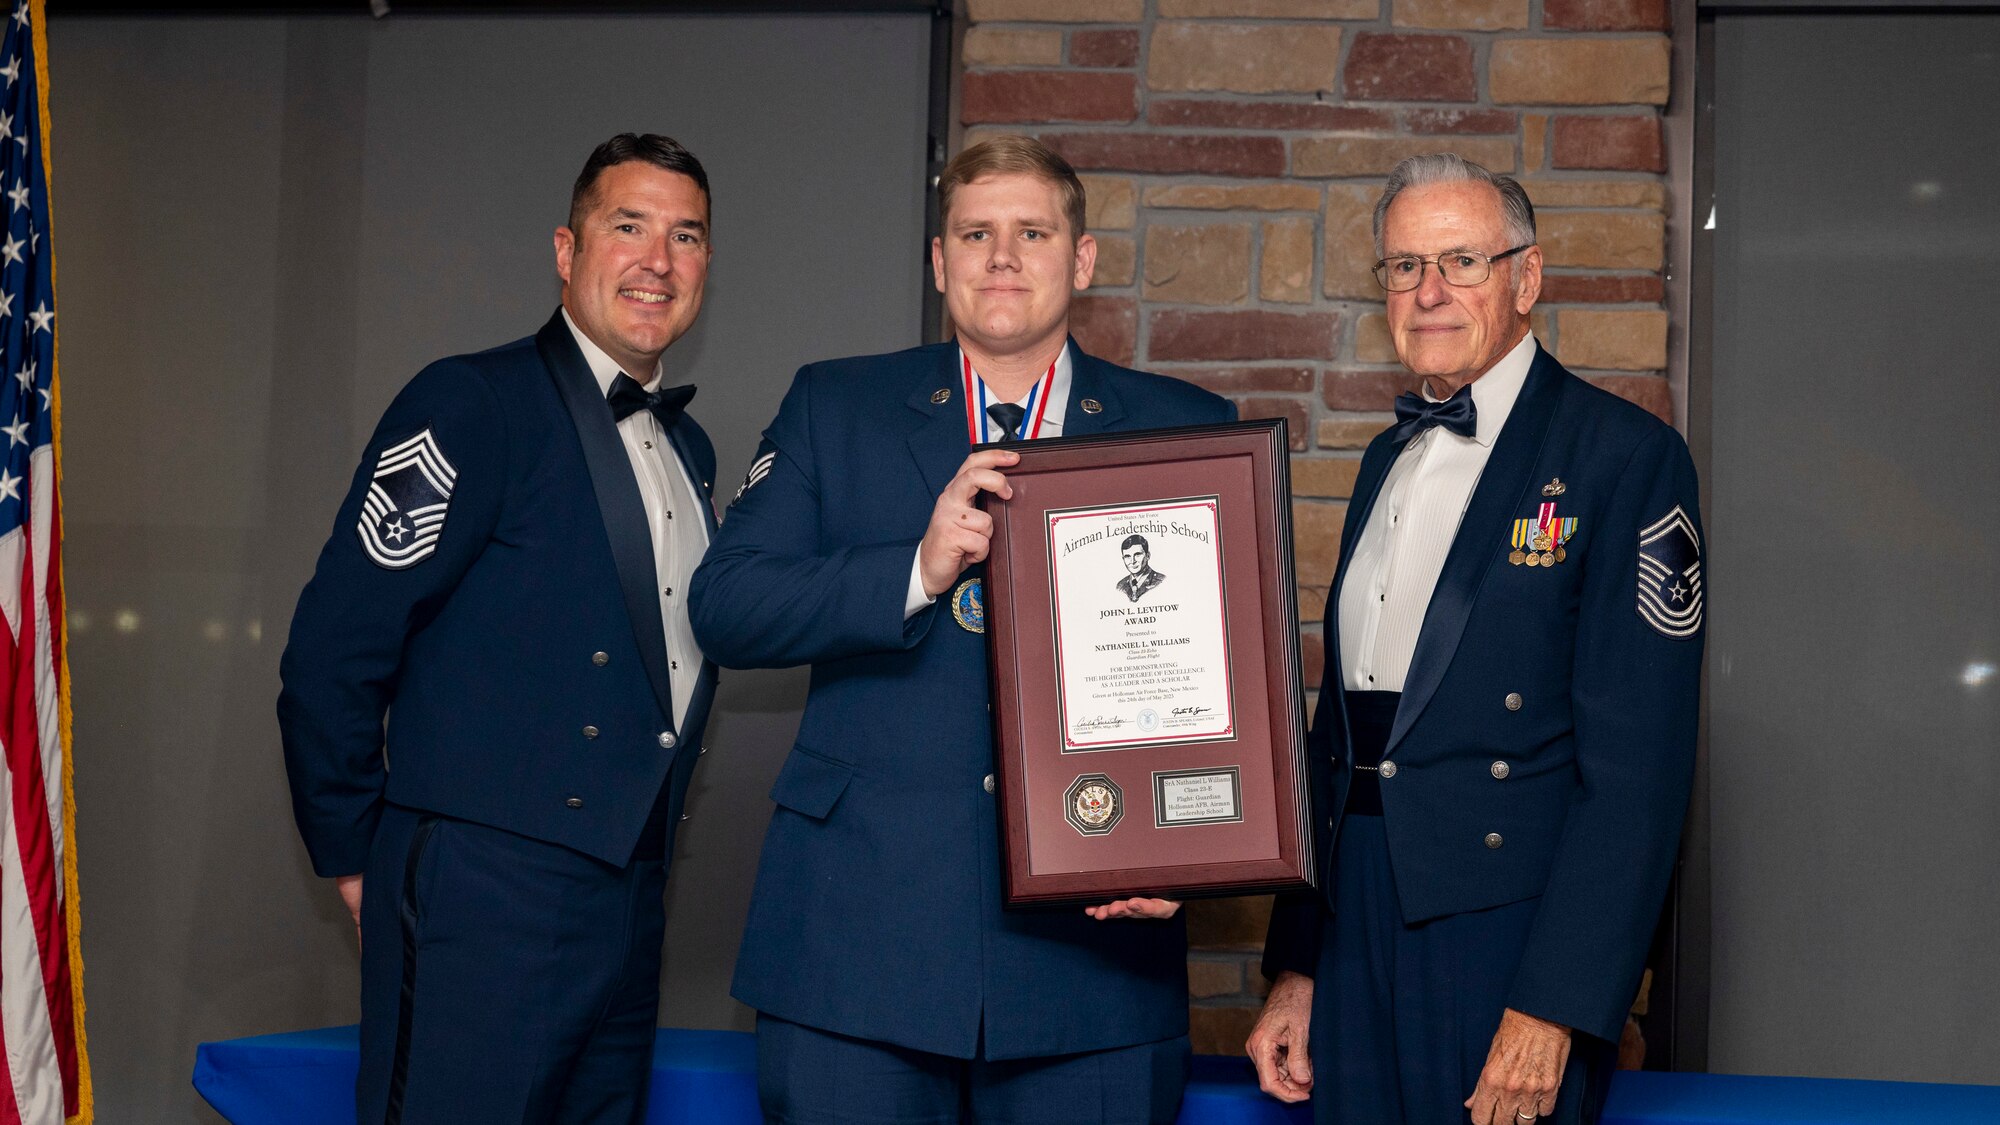 U.S. Air Force Senior Airman Nathaniel Williams, Airman Leadership Graduate, accepts the John L. Levitow Award during the graduation of ALS Class 23-E at Holloman Air Force Base, New Mexico, May 24, 2023.